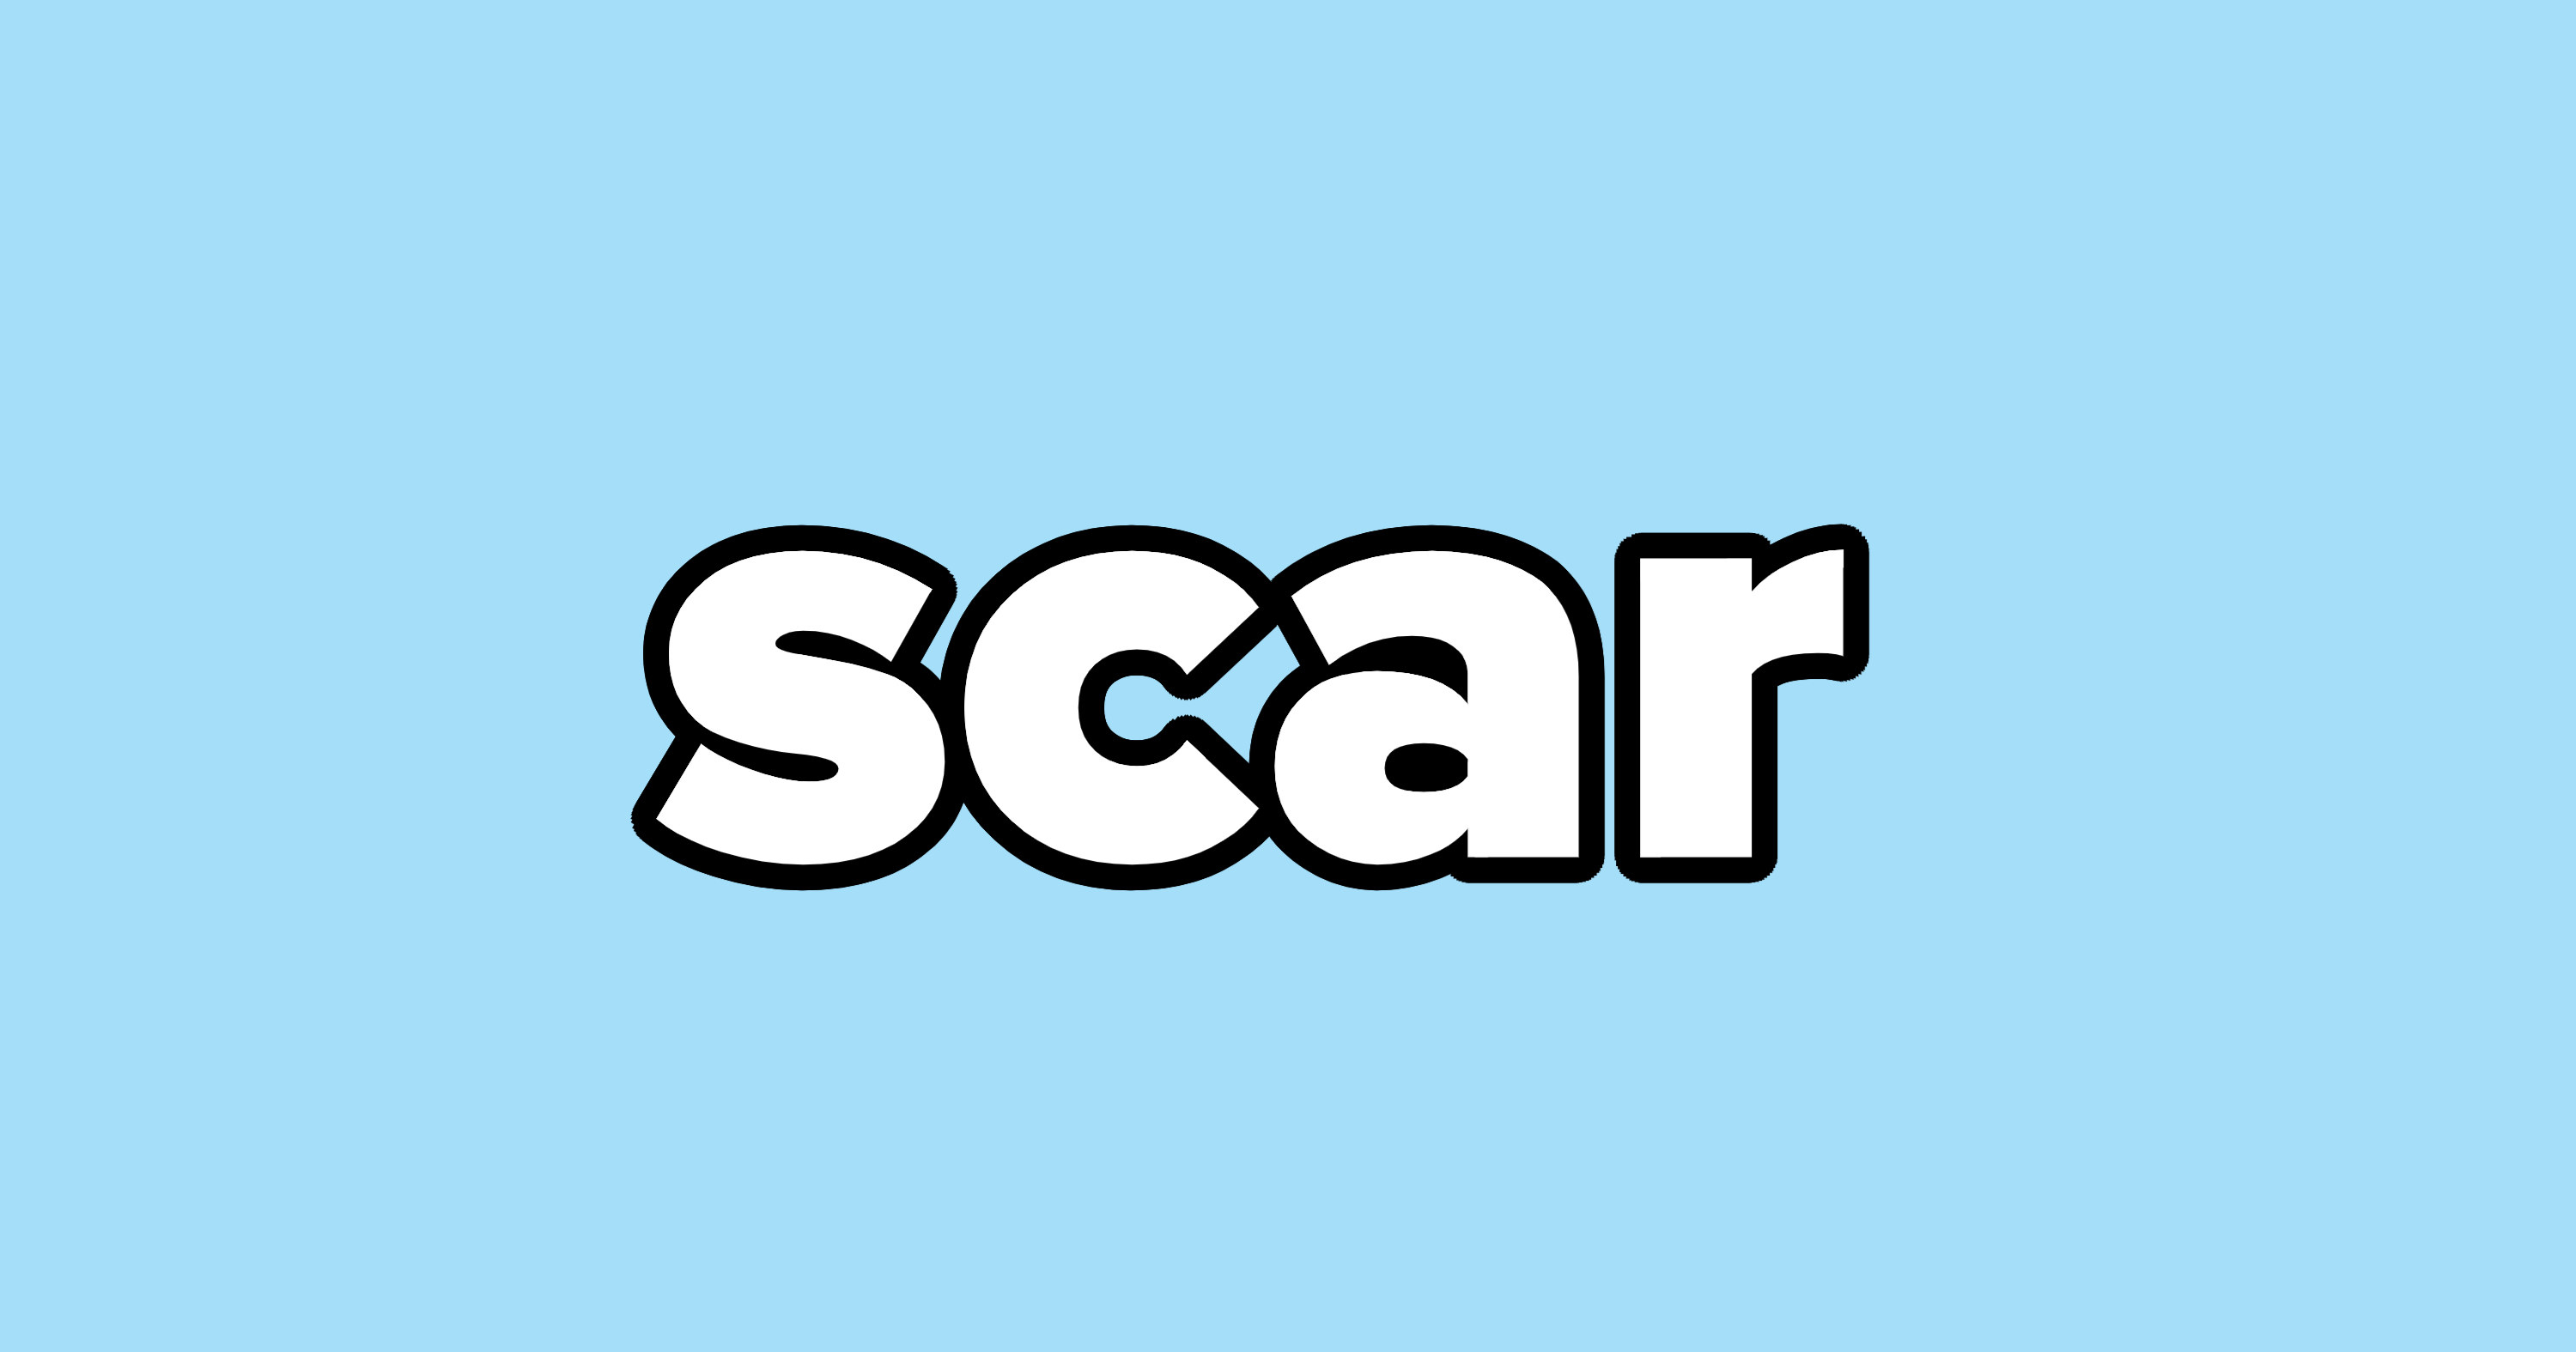 A Pixar movie anagram that reads: &quot;scar&quot;